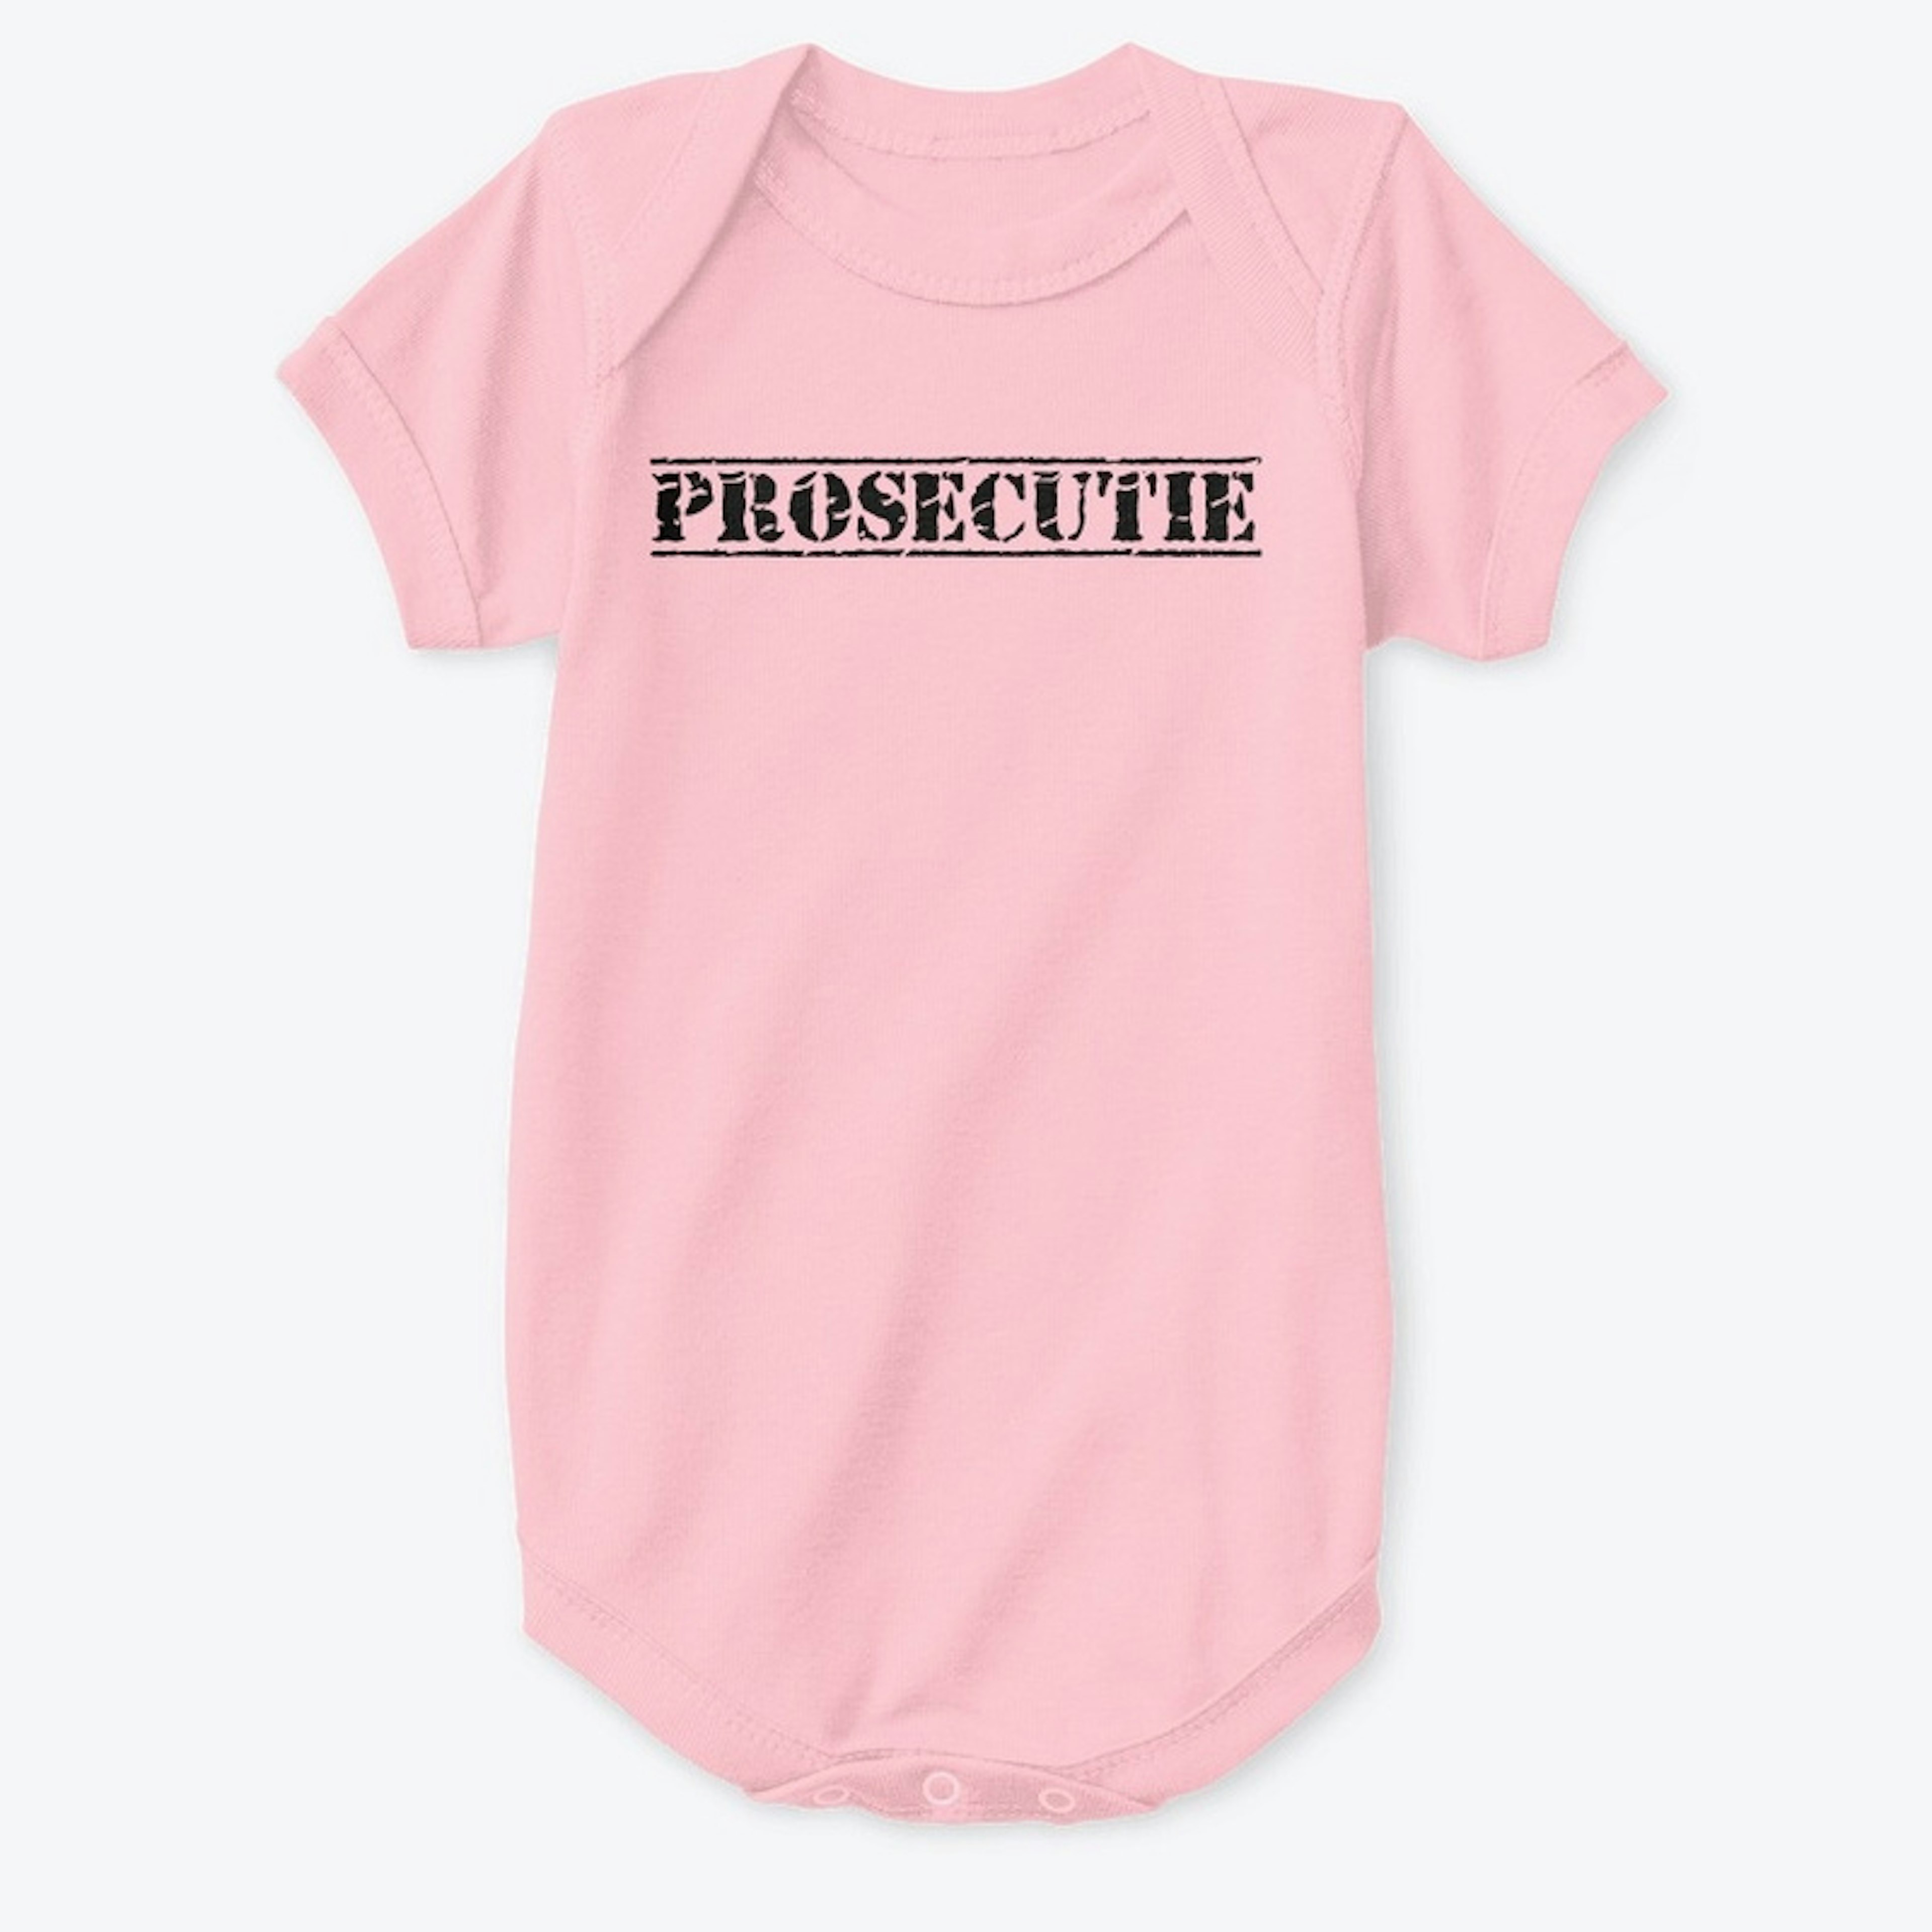 Prosecutie Baby Onesie